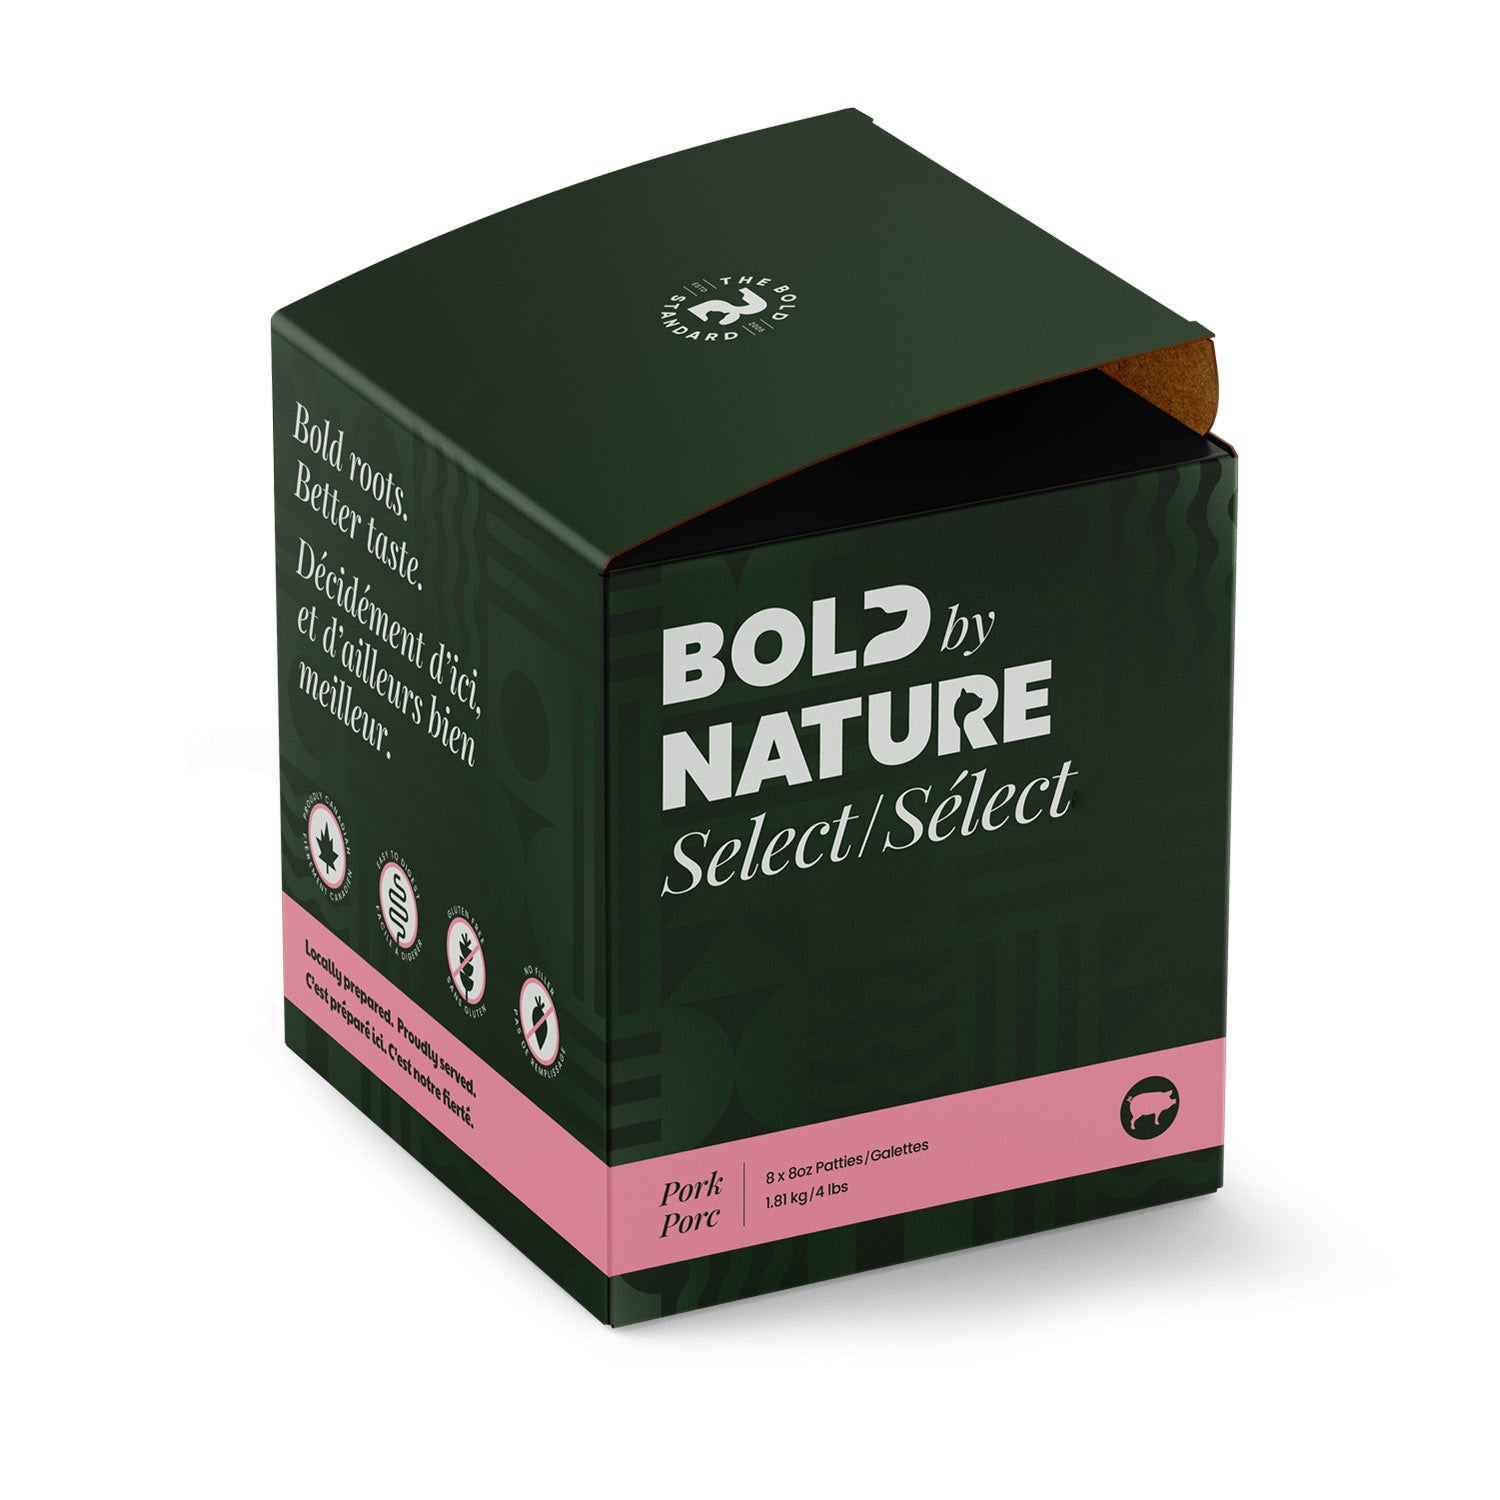 Bold By Nature - Mega Dog Select - Pork & Beef Tripe - 4lbs